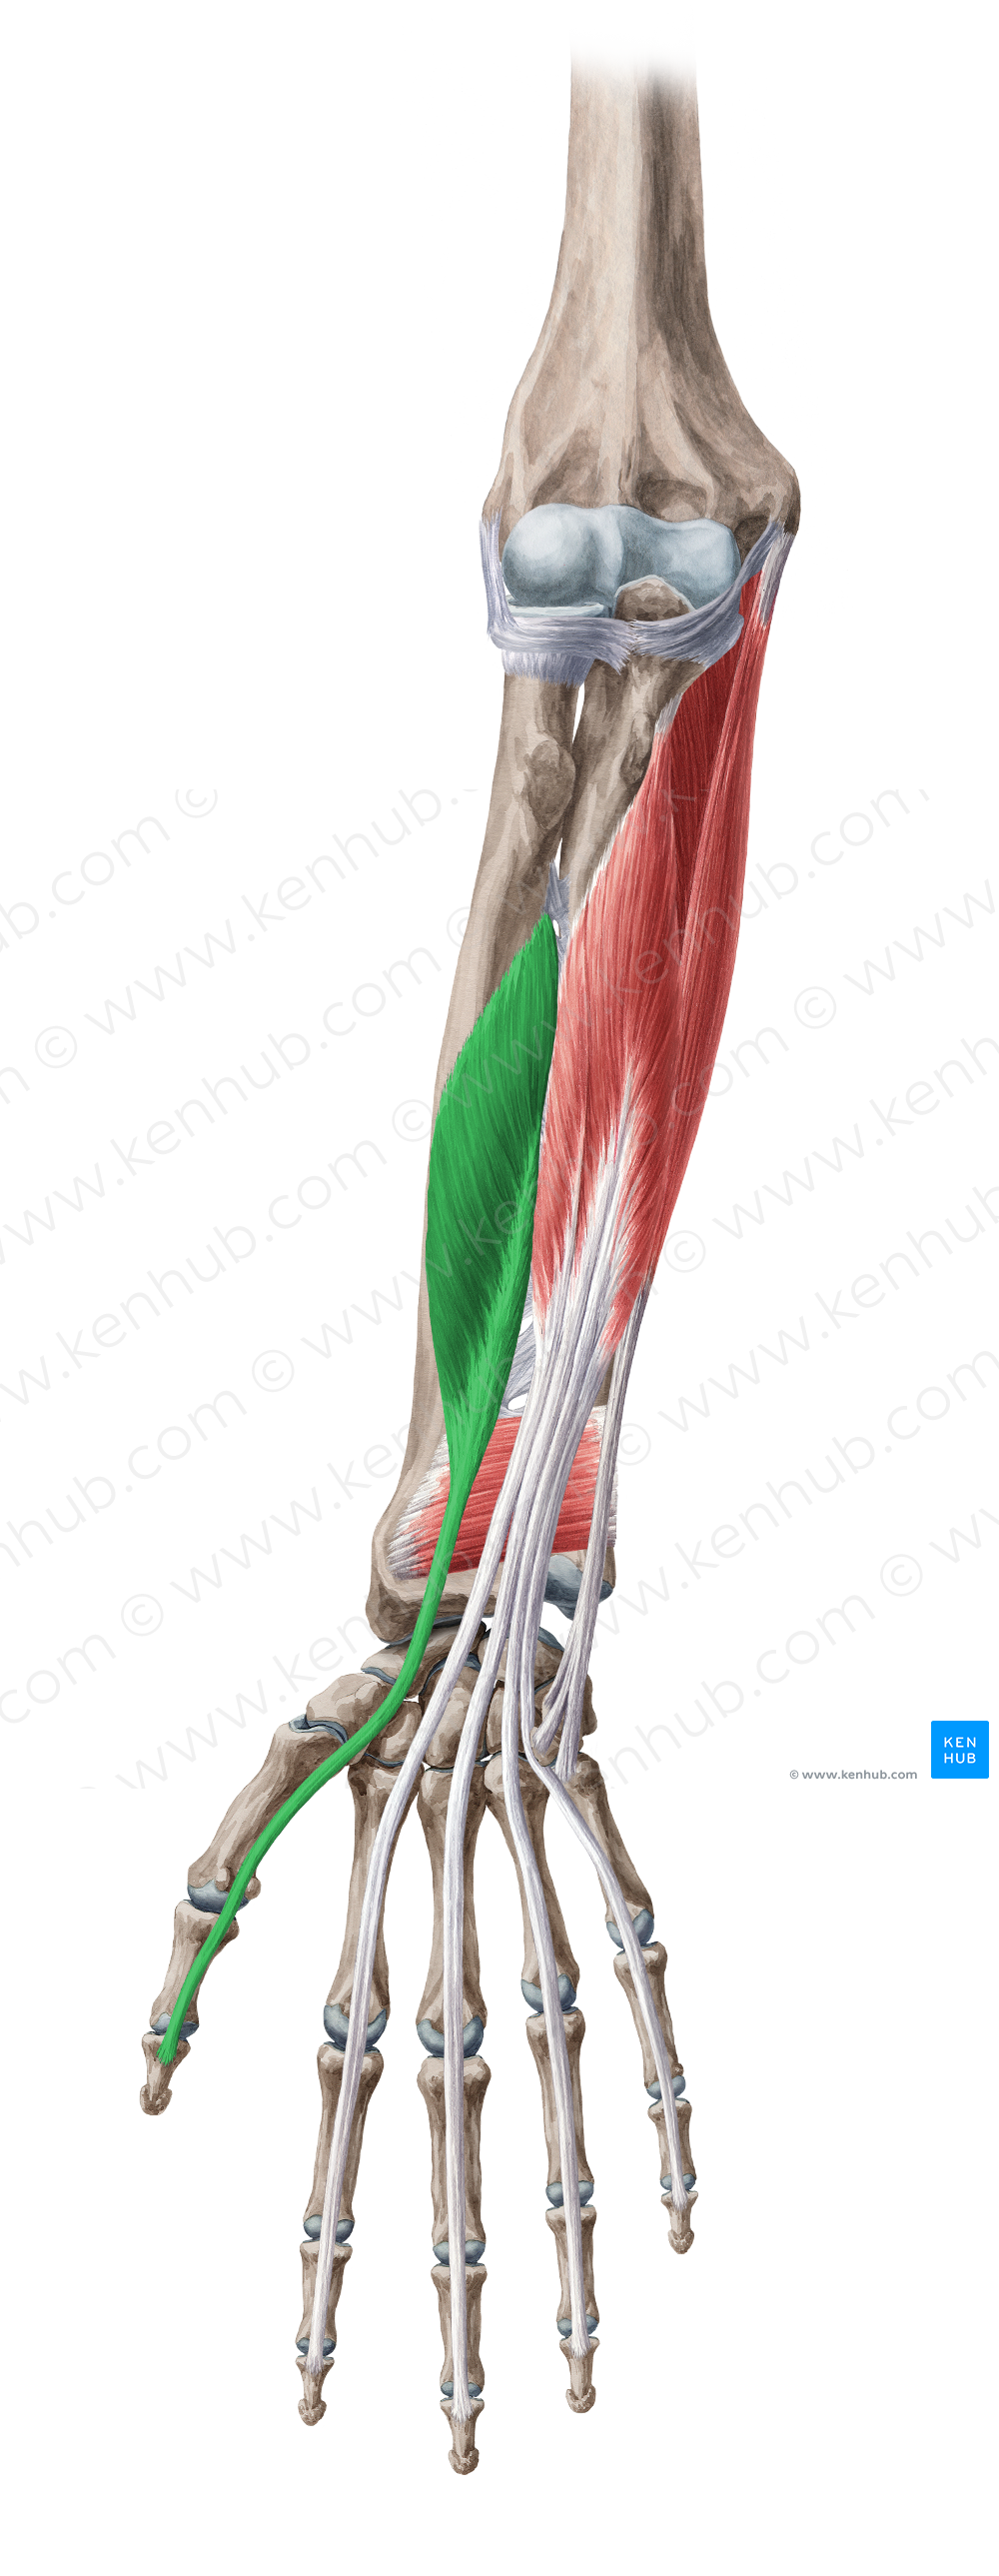 Flexor pollicis longus muscle (#5386)